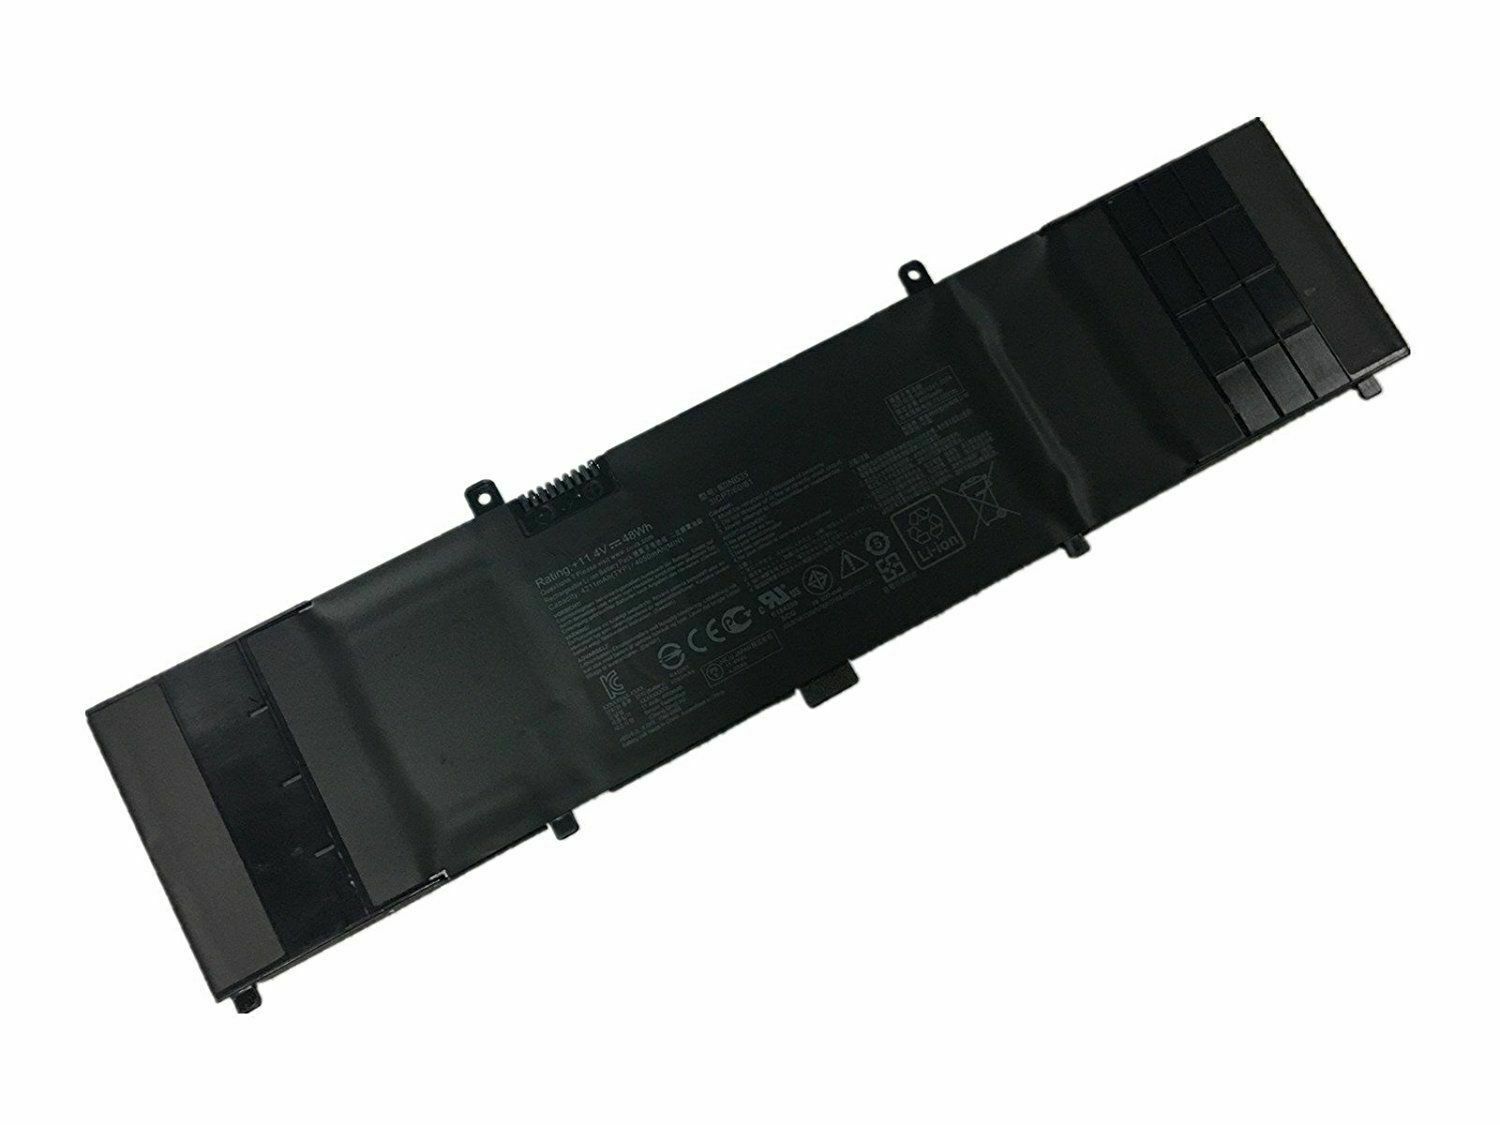 Asus ZenBook UX3410UQ-GV999T UX410 UX410U UX410UA UX410UA-AS74 compatible battery